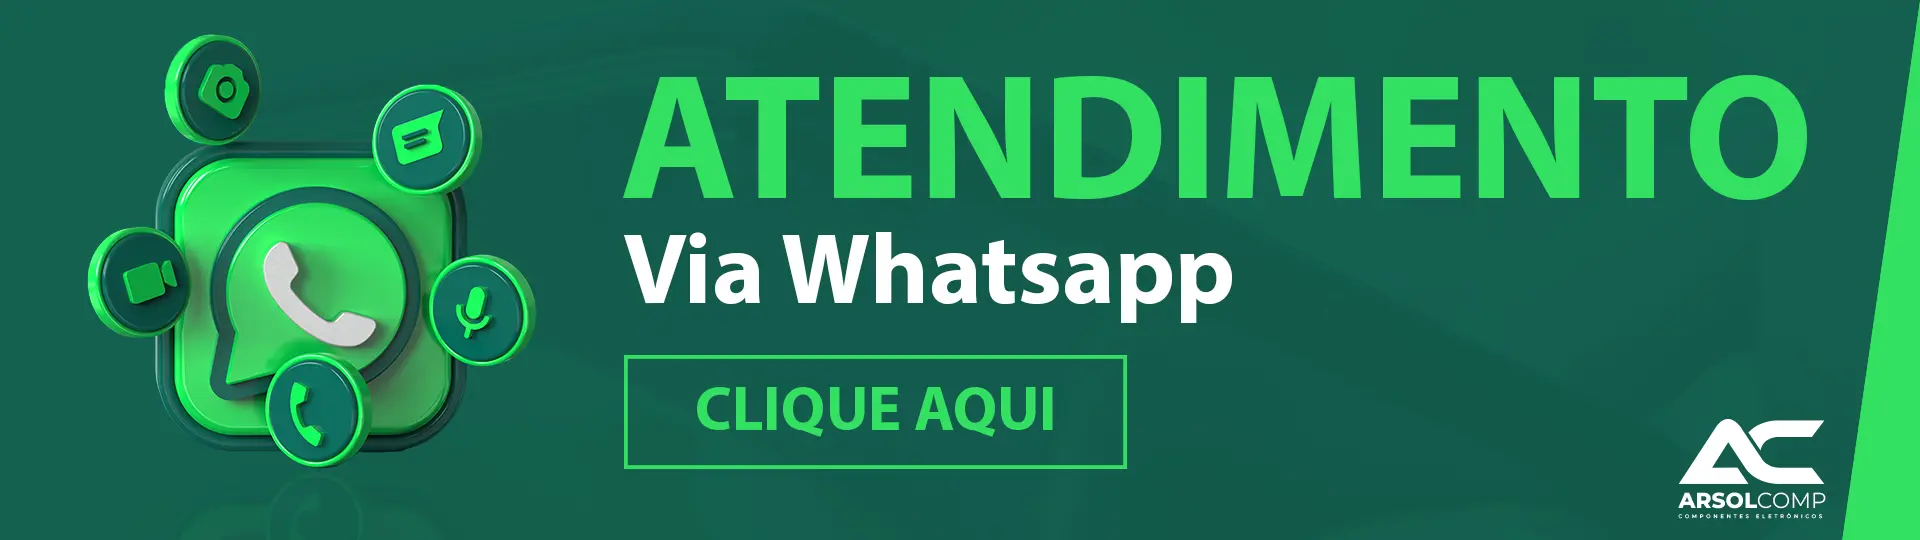 atendimento whatsapp banner copiar